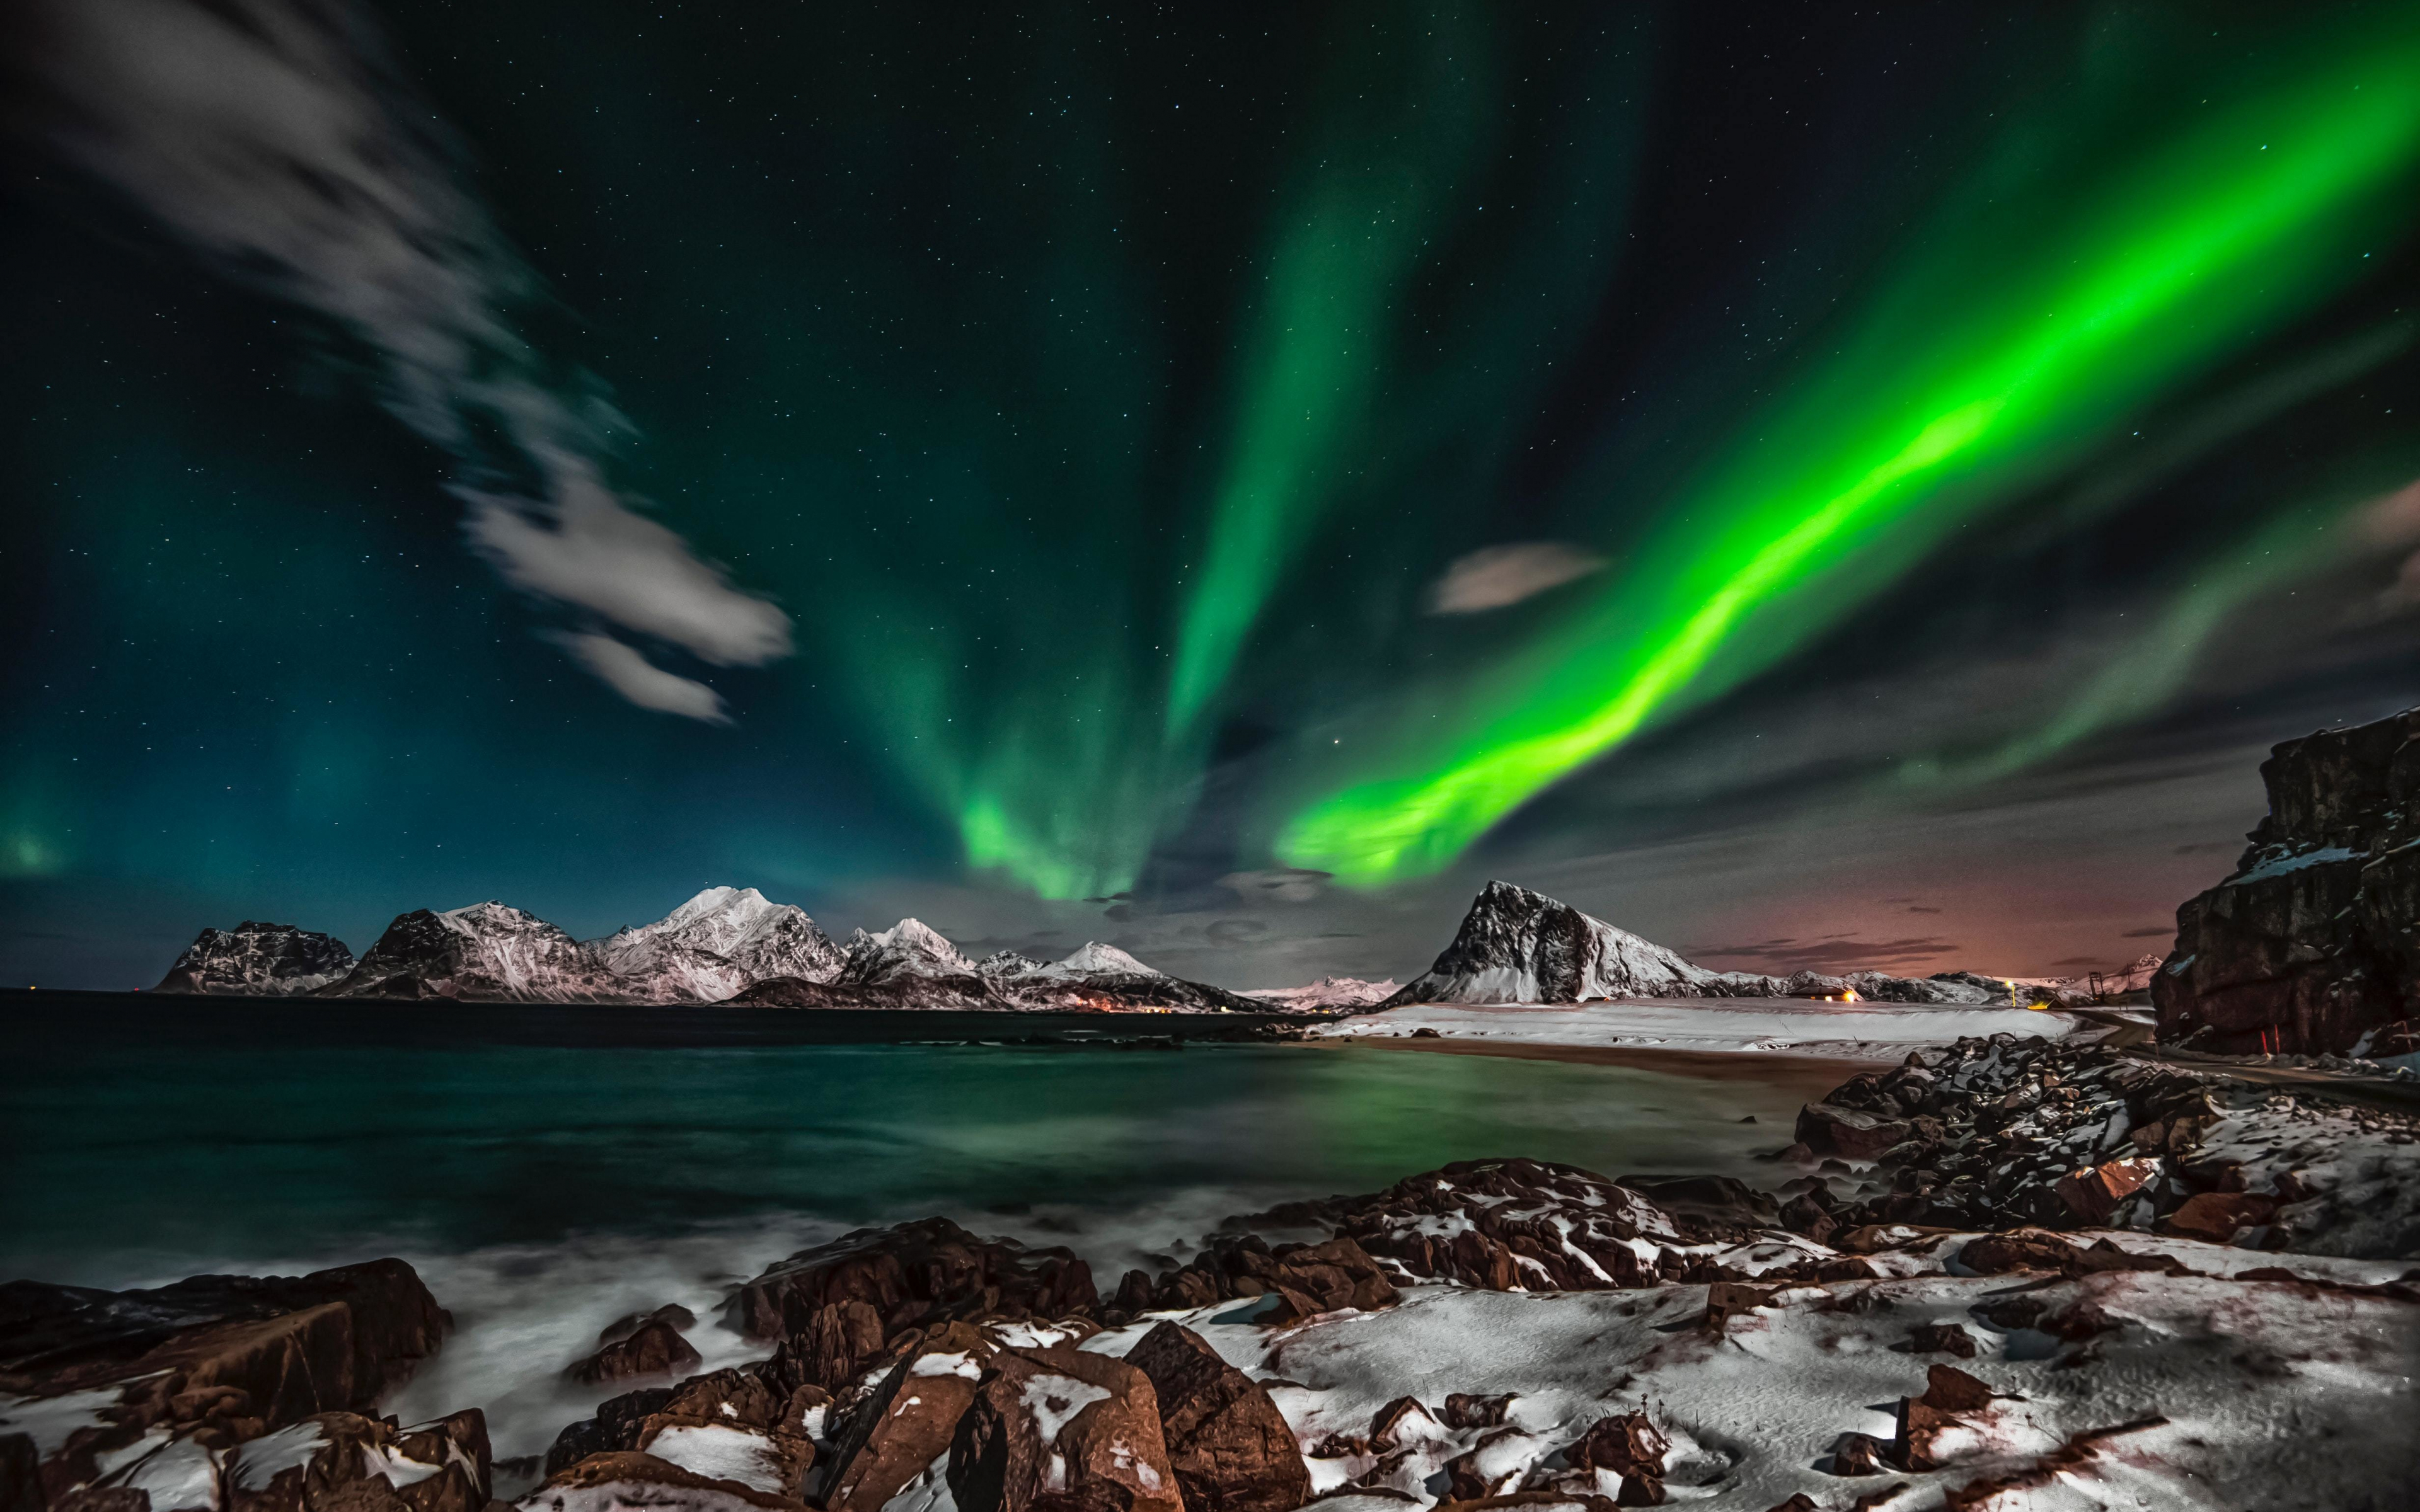 Download 3840x2400 Wallpaper Arctic Mountains Nature Aurora Borealis 4k Ultra Hd 16 10 Widescreen 3840x2400 Hd Image Background